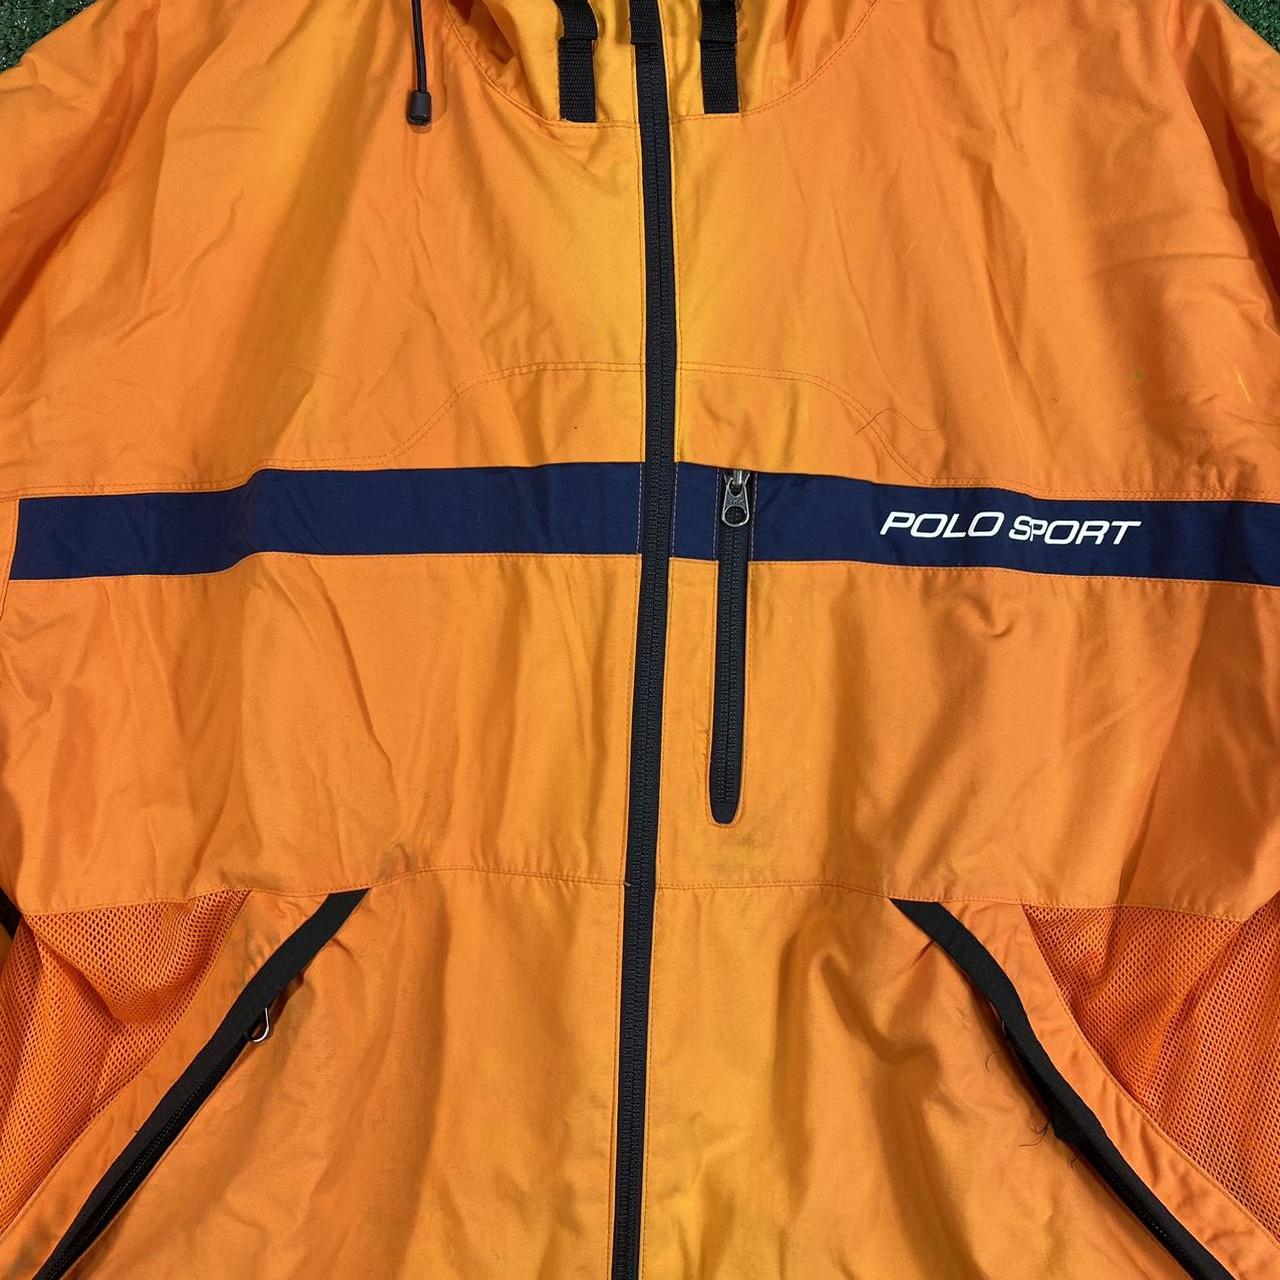 Polo Sport Men's Orange and Navy Jacket | Depop